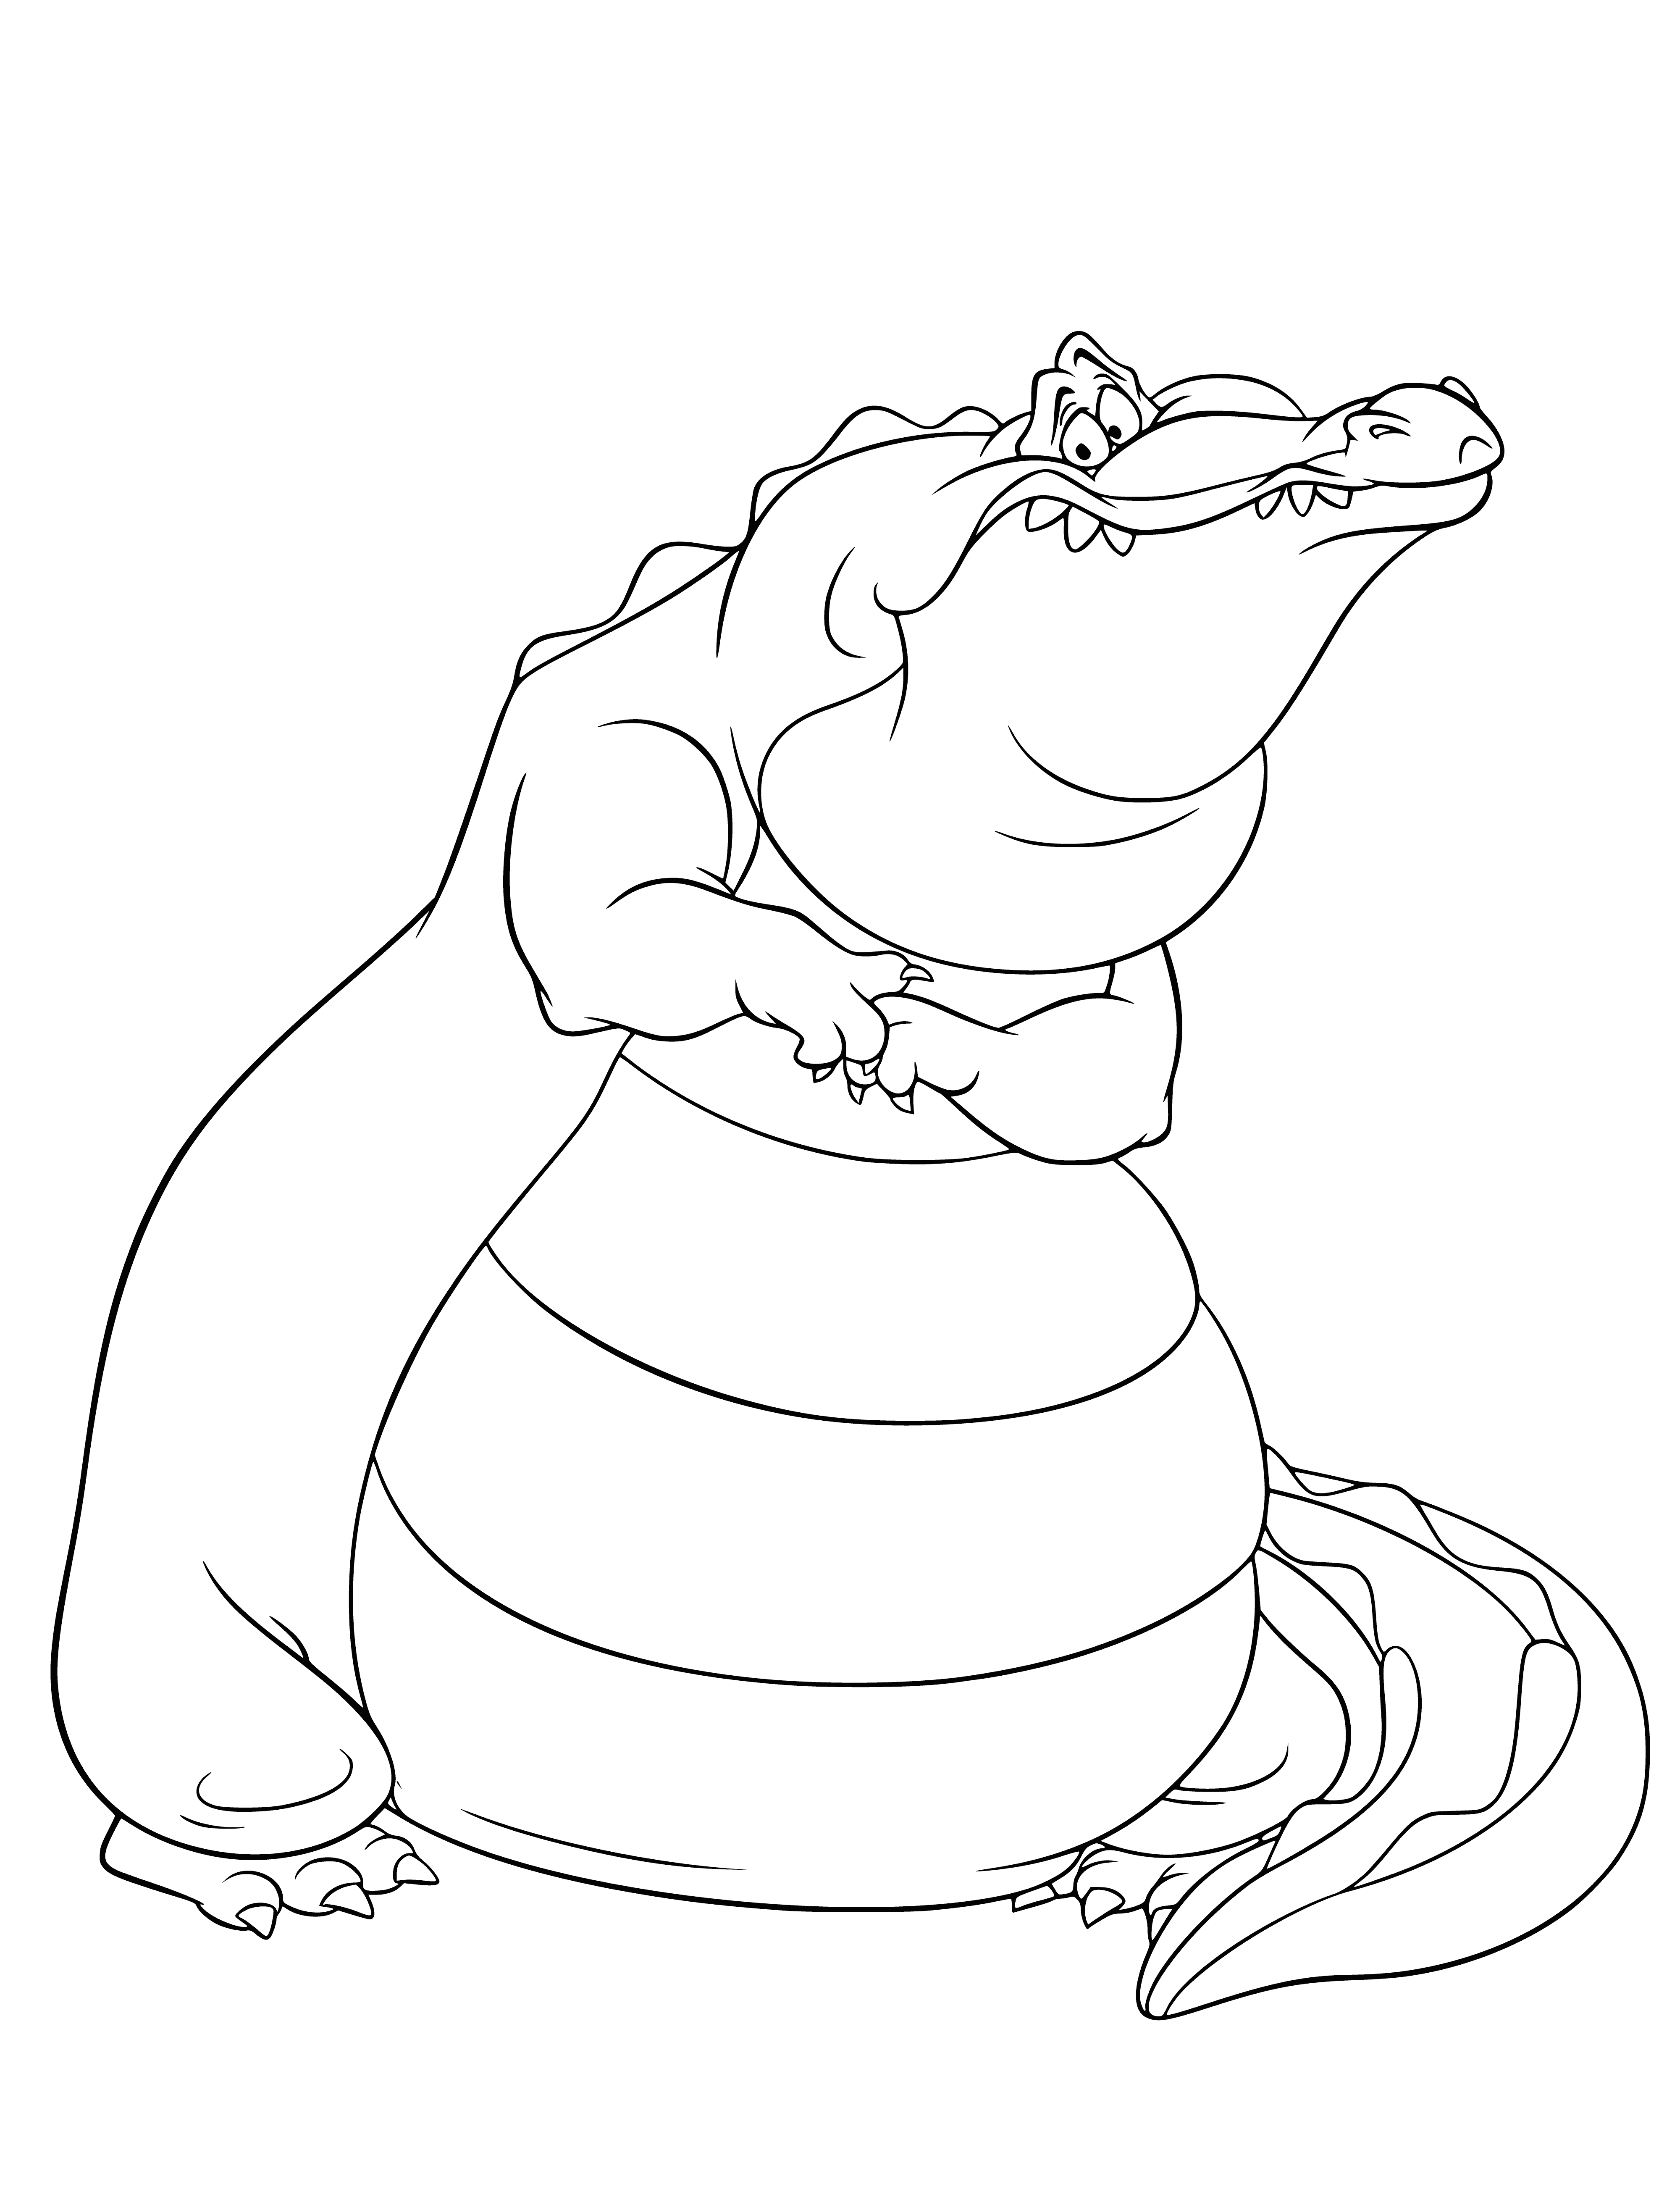 Alligator-jazzman Louis coloring page